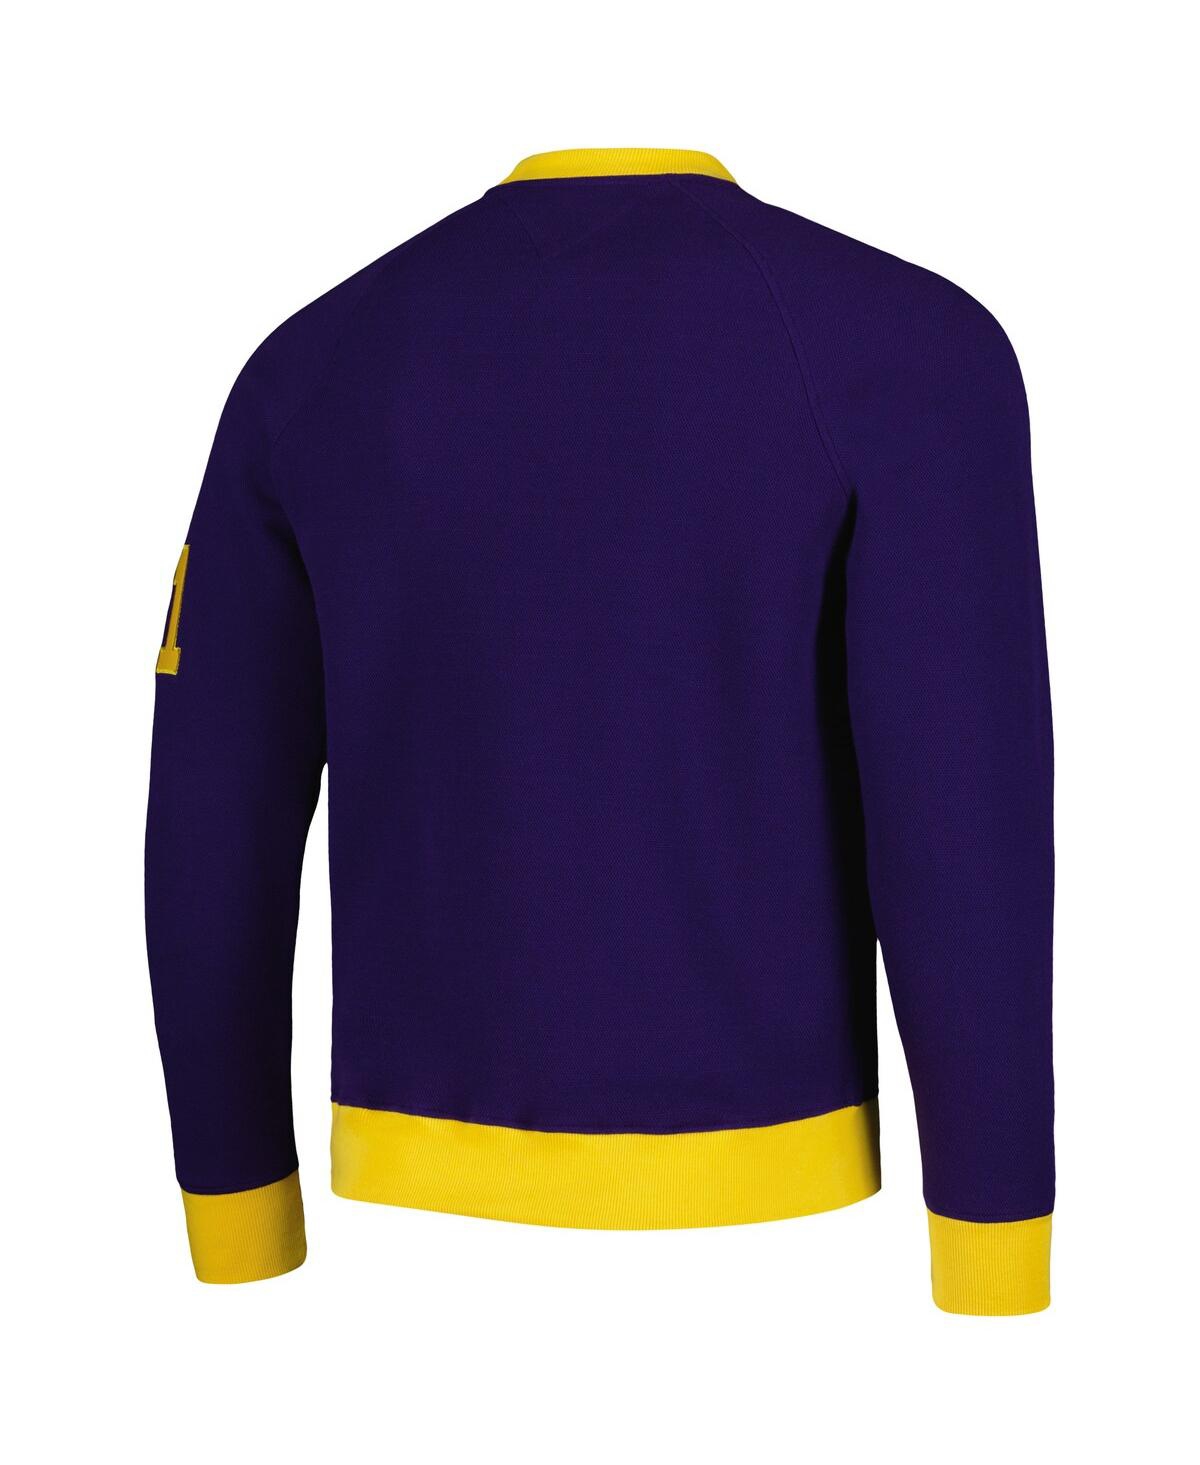 Shop Tommy Hilfiger Men's  Purple Minnesota Vikings Reese Raglan Tri-blend Pullover Sweatshirt